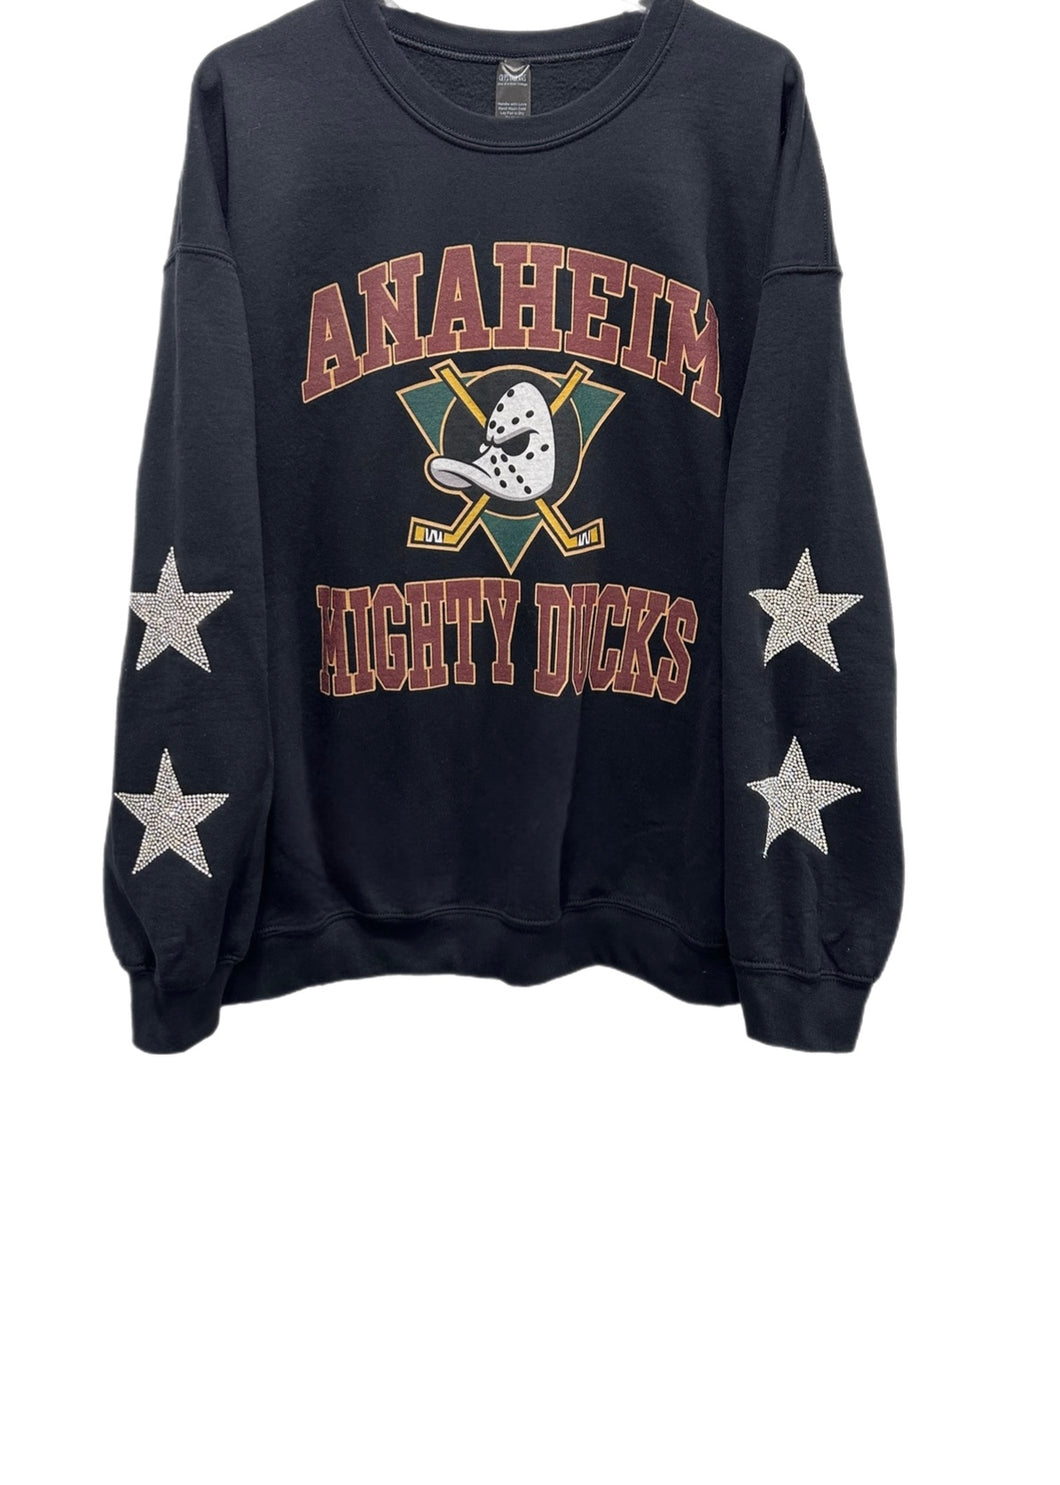 Anaheim Ducks, NHL One of a KIND Vintage “Mighty Ducks” Sweatshirt with Crystal Star Design.